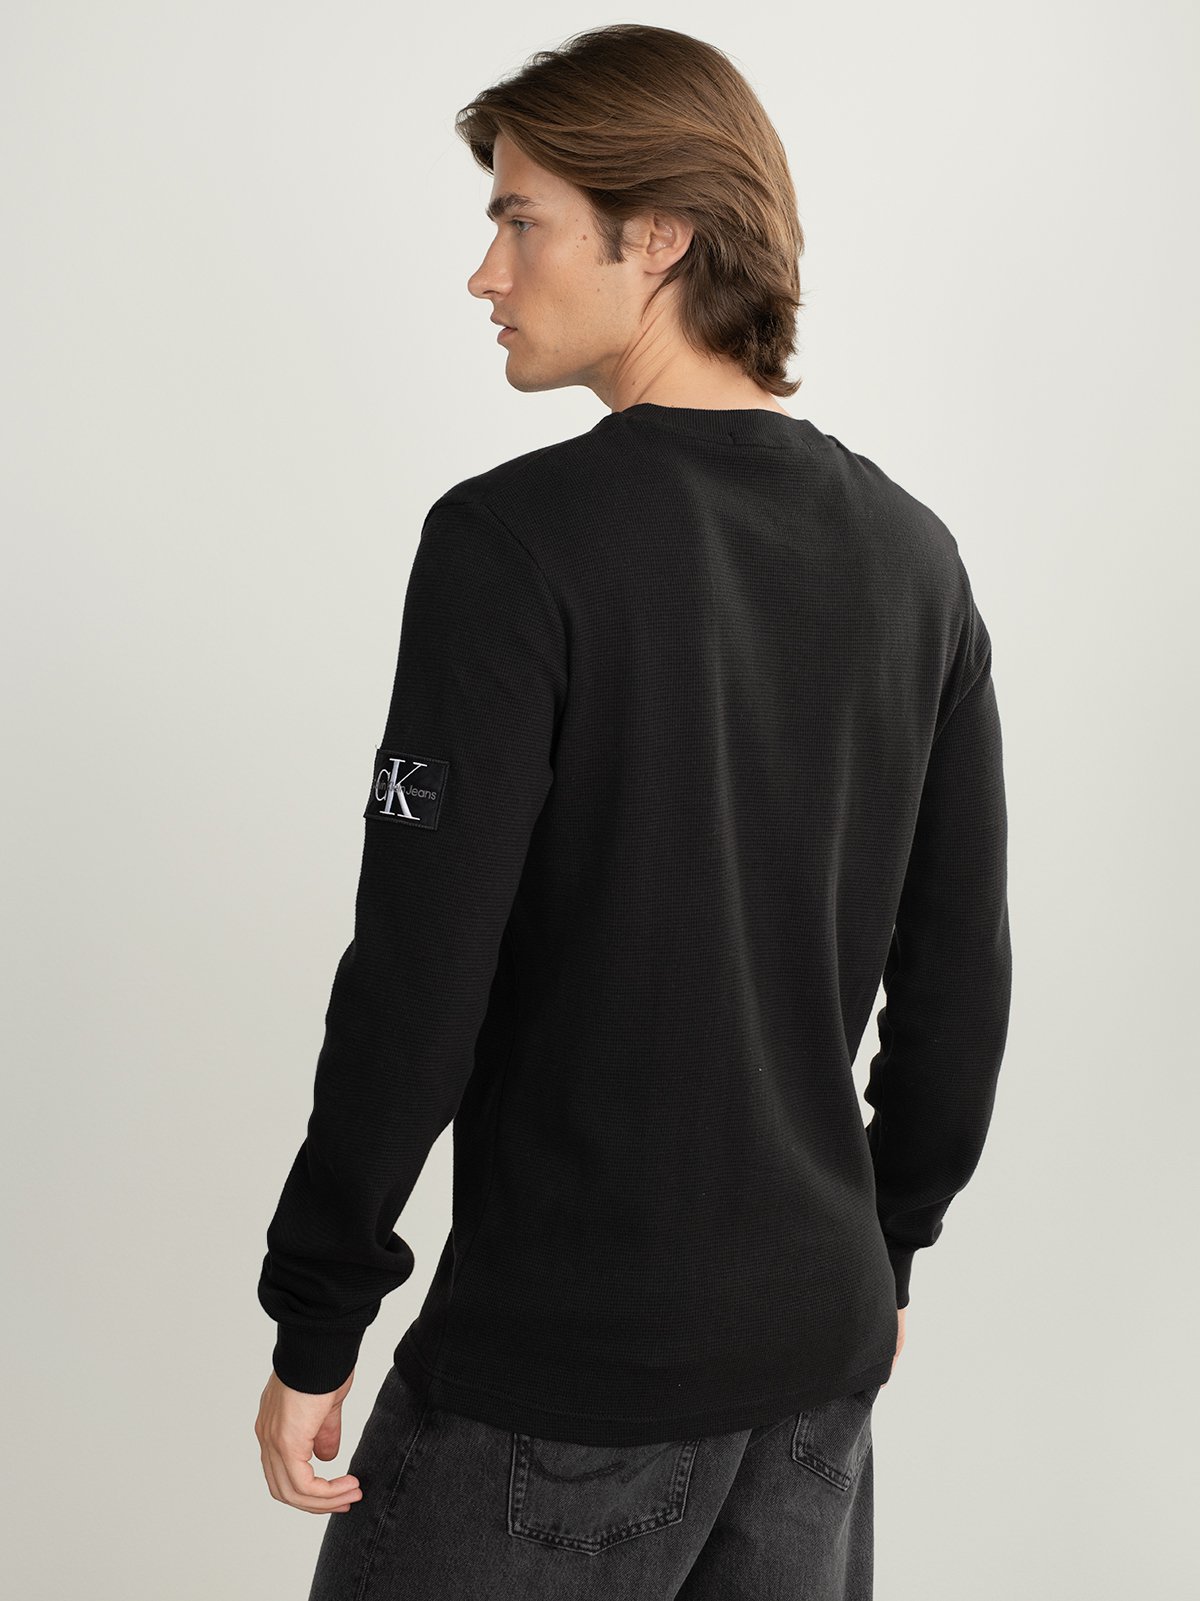 Calvin Klein Jeans Black on Black T-Shirt in Black Ib0Ib01447